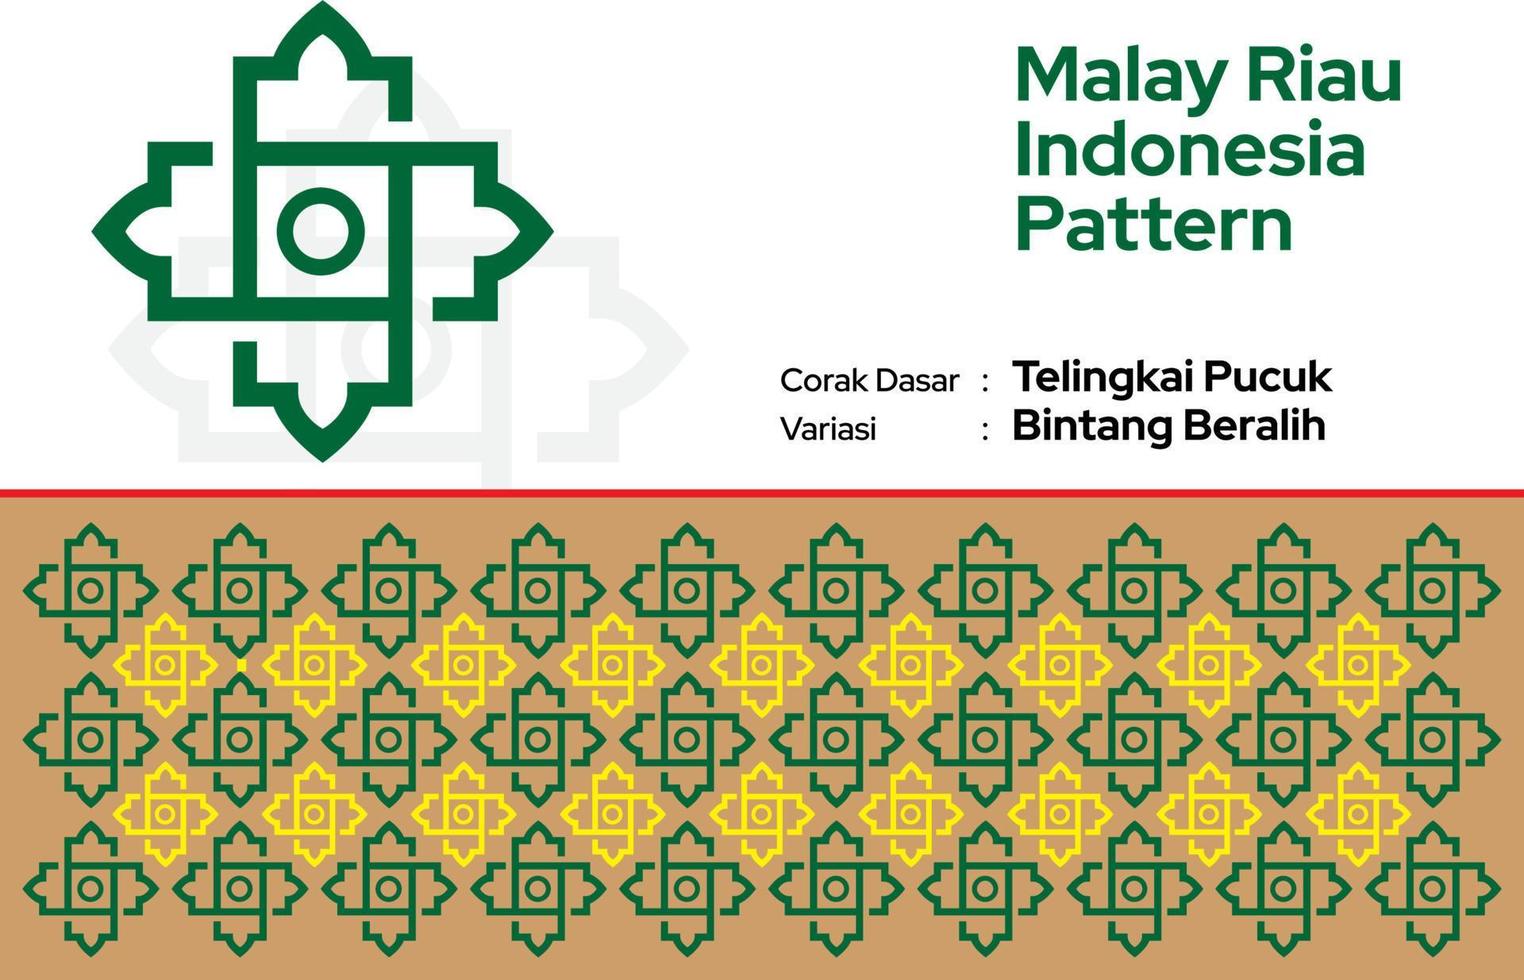 modello malese Riau batik songket tenun, tessitura motivo telingkai pucuk, bintang beralih, melayu sfondo vettore